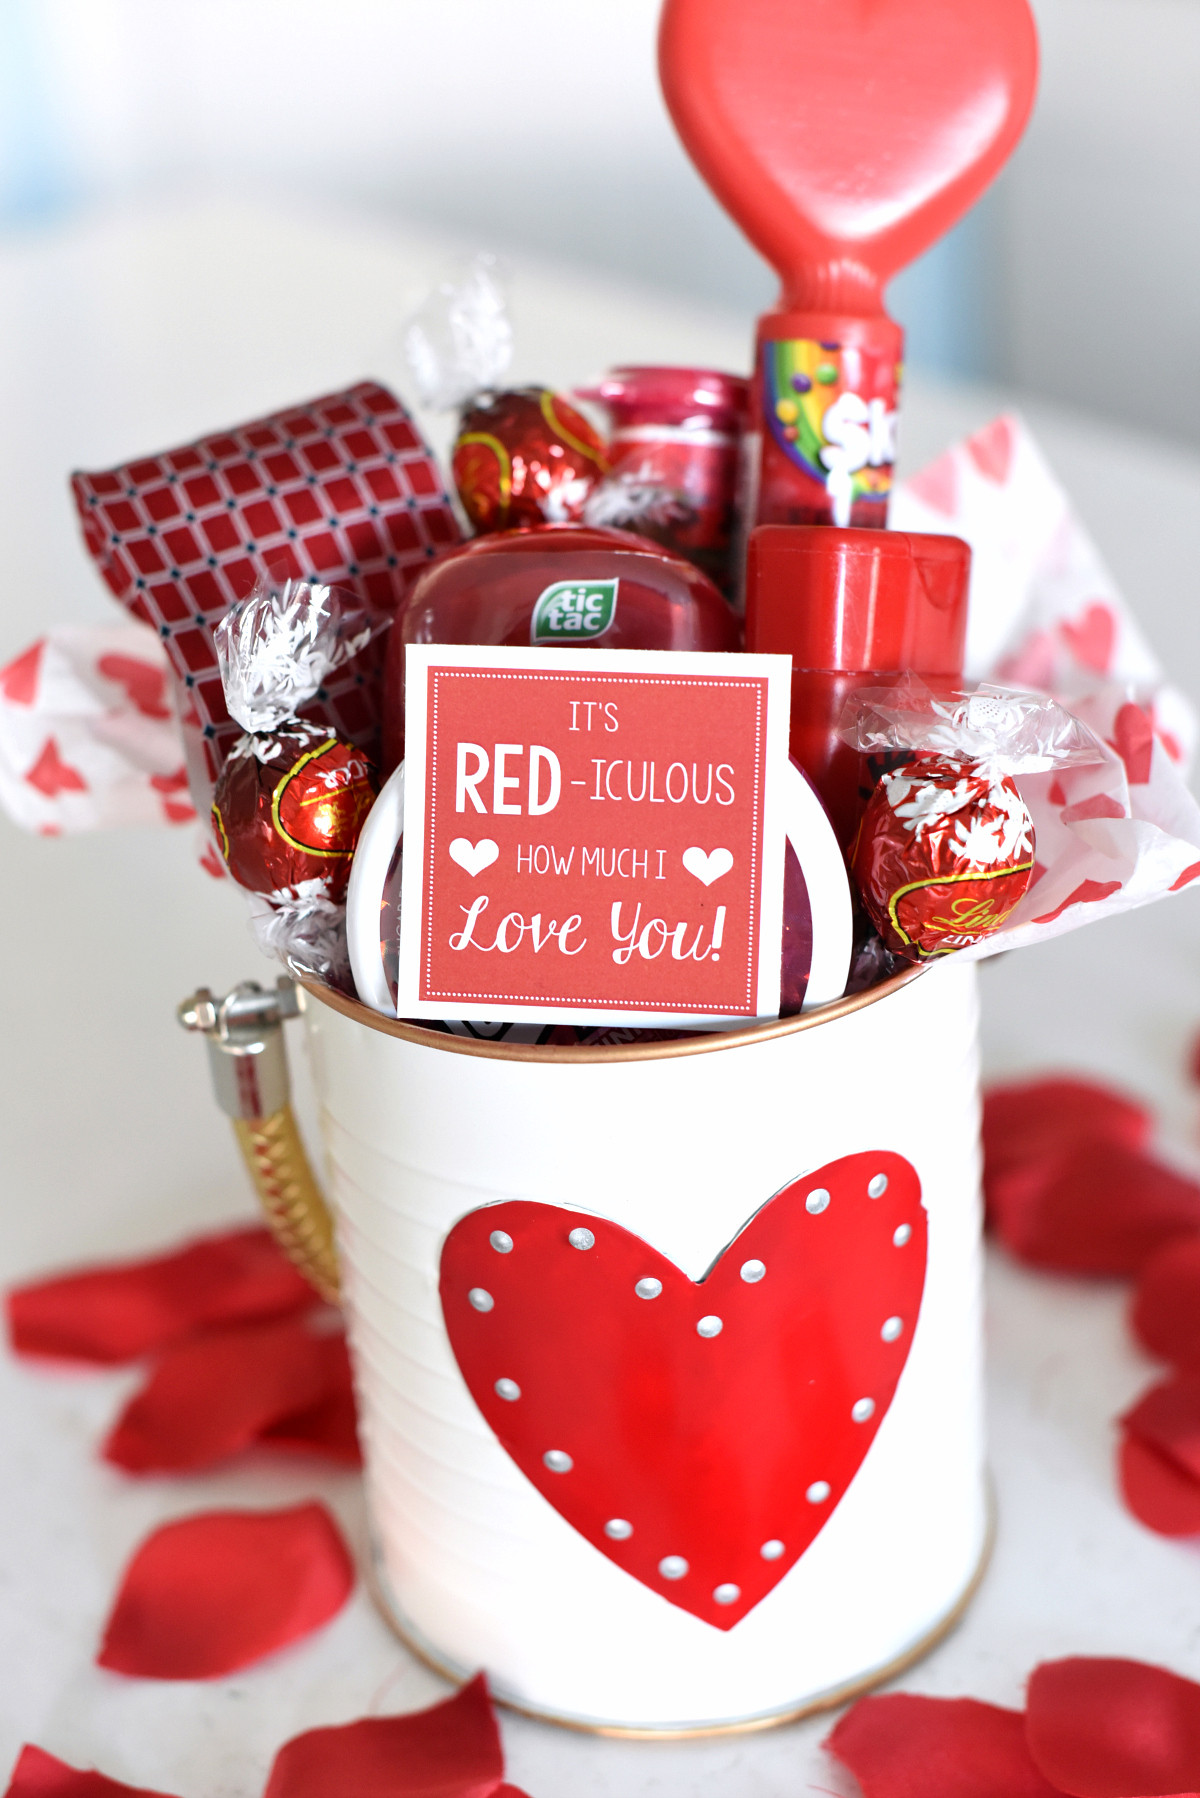 Unconventional Valentines Gift Ideas
 25 DIY Valentine s Day Gift Ideas Teens Will Love